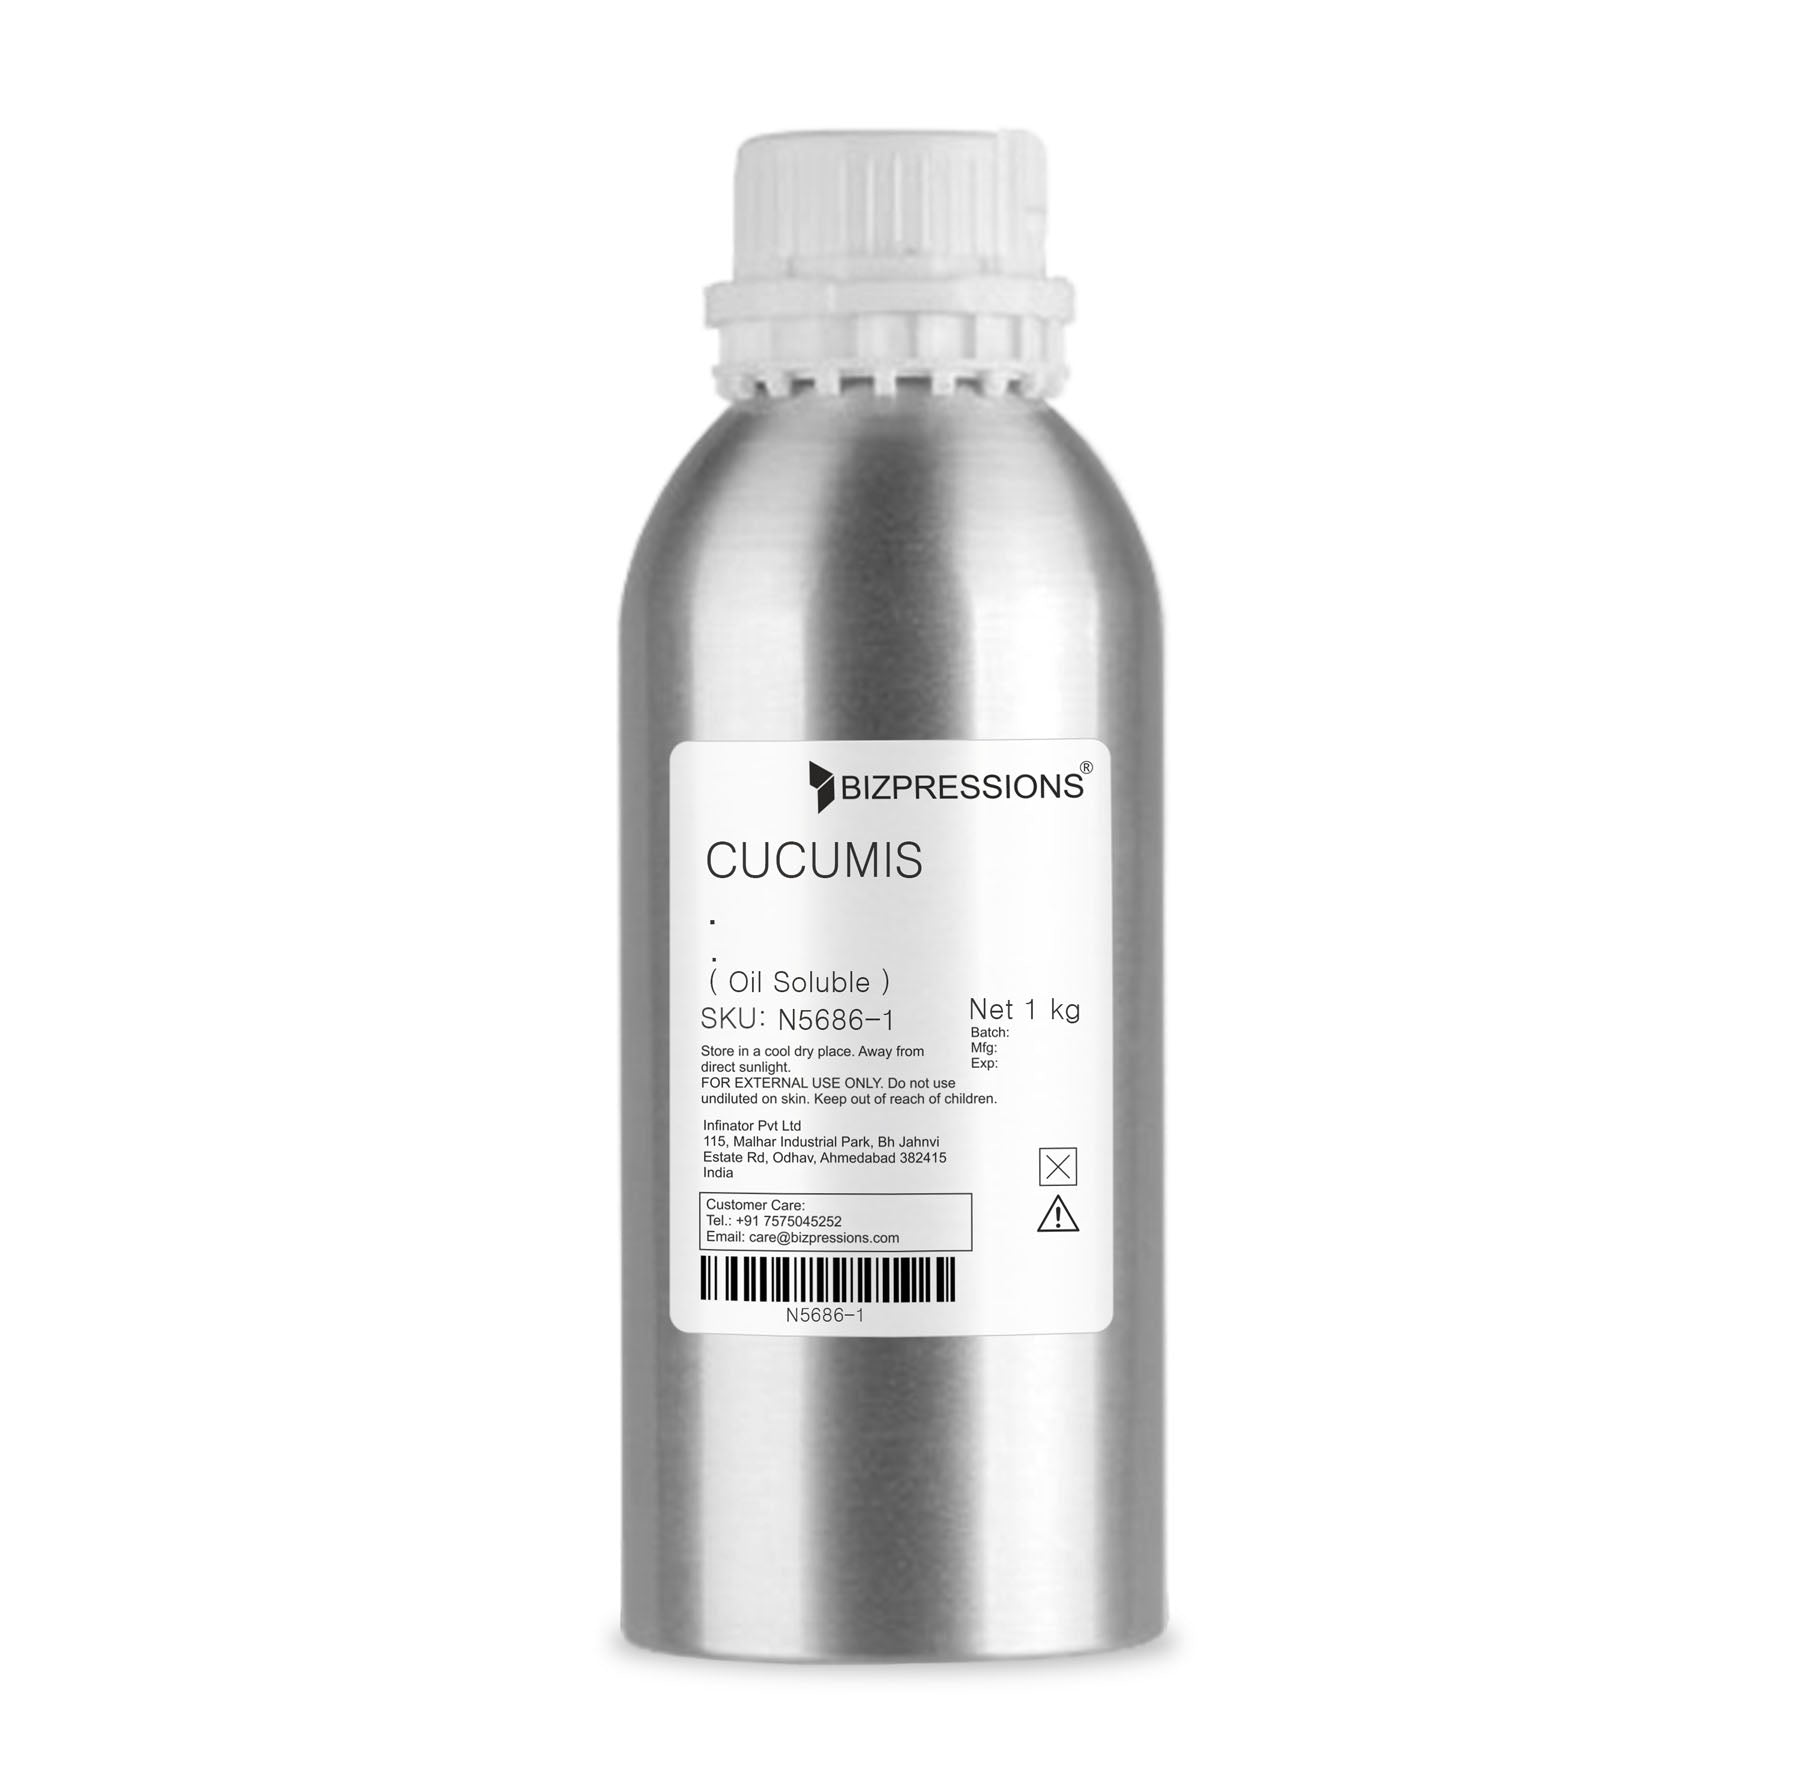 CUCUMIS - Fragrance ( Oil Soluble ) - 1 kg